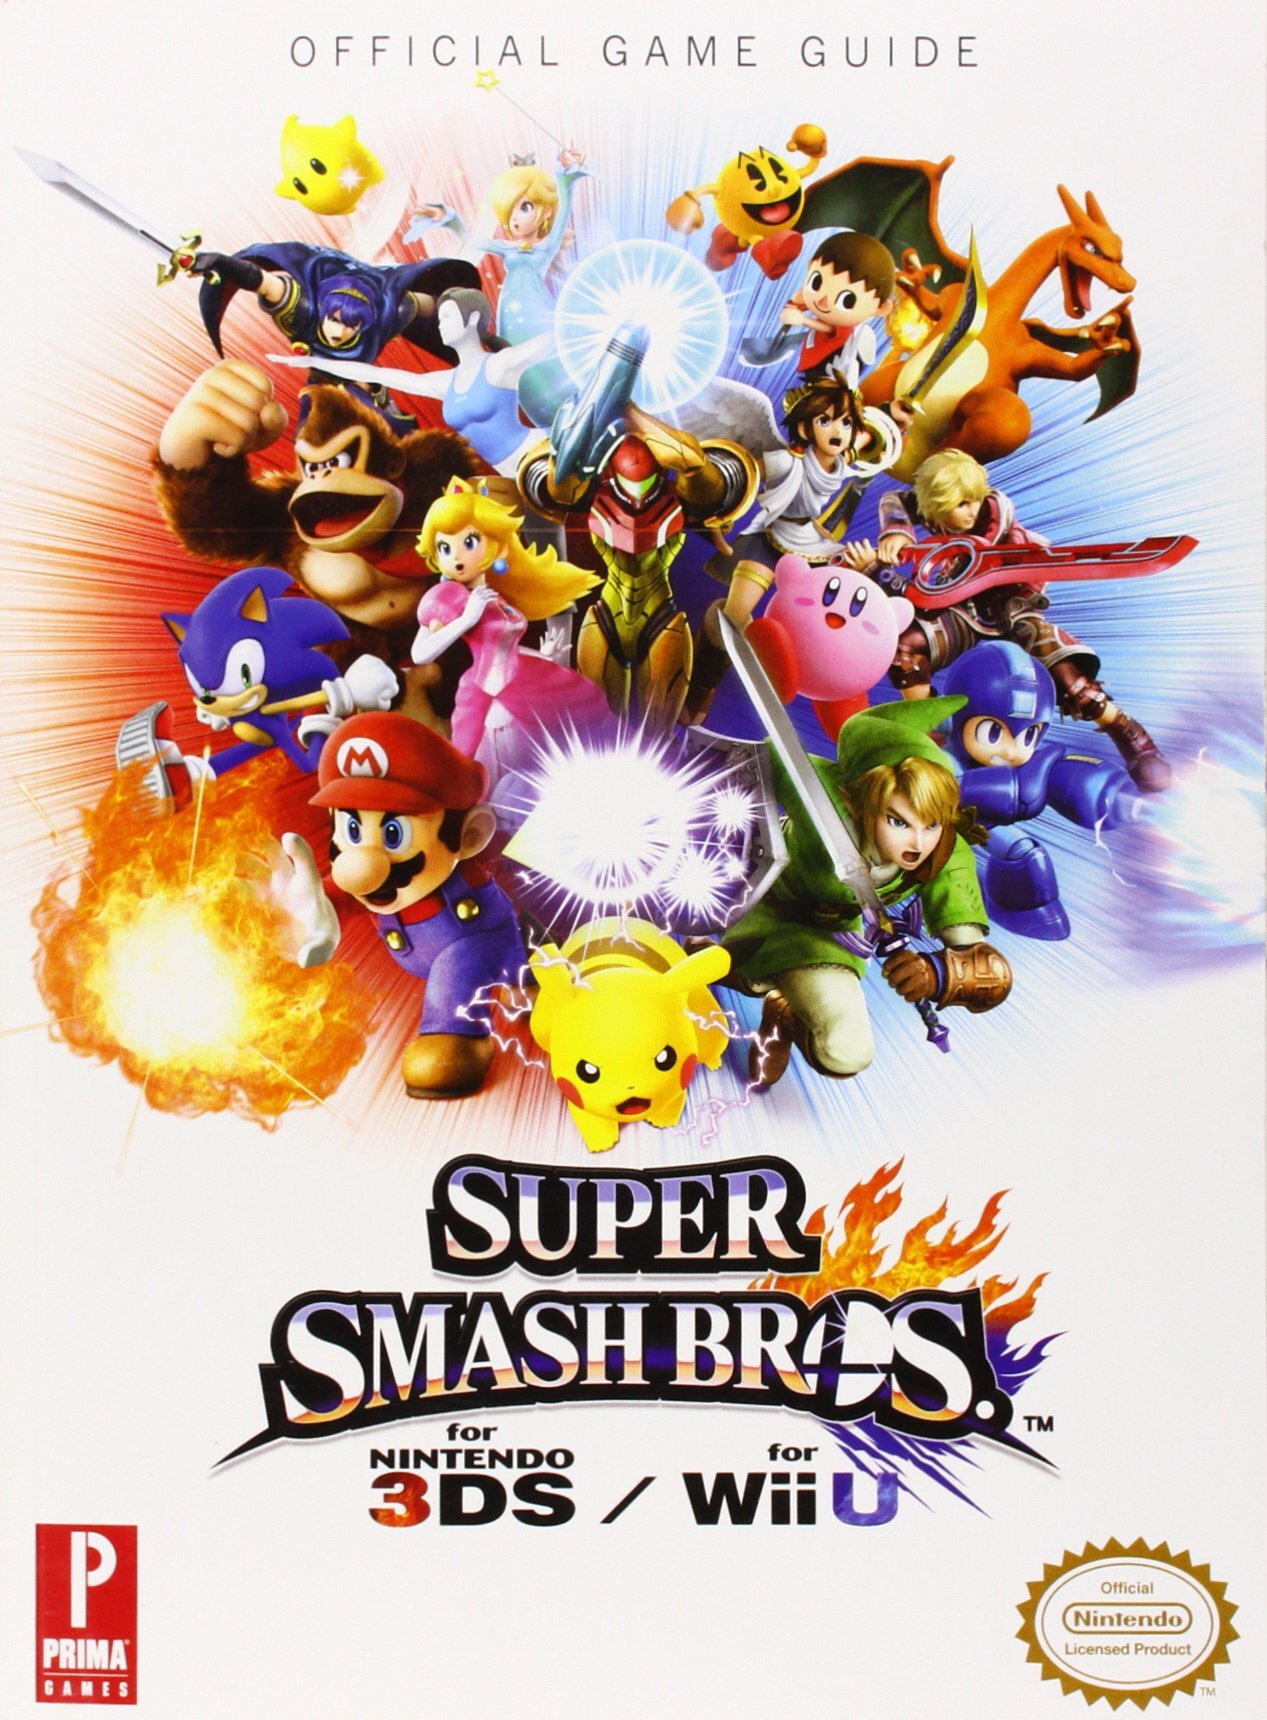 Super Smash Bros Battle Royale 